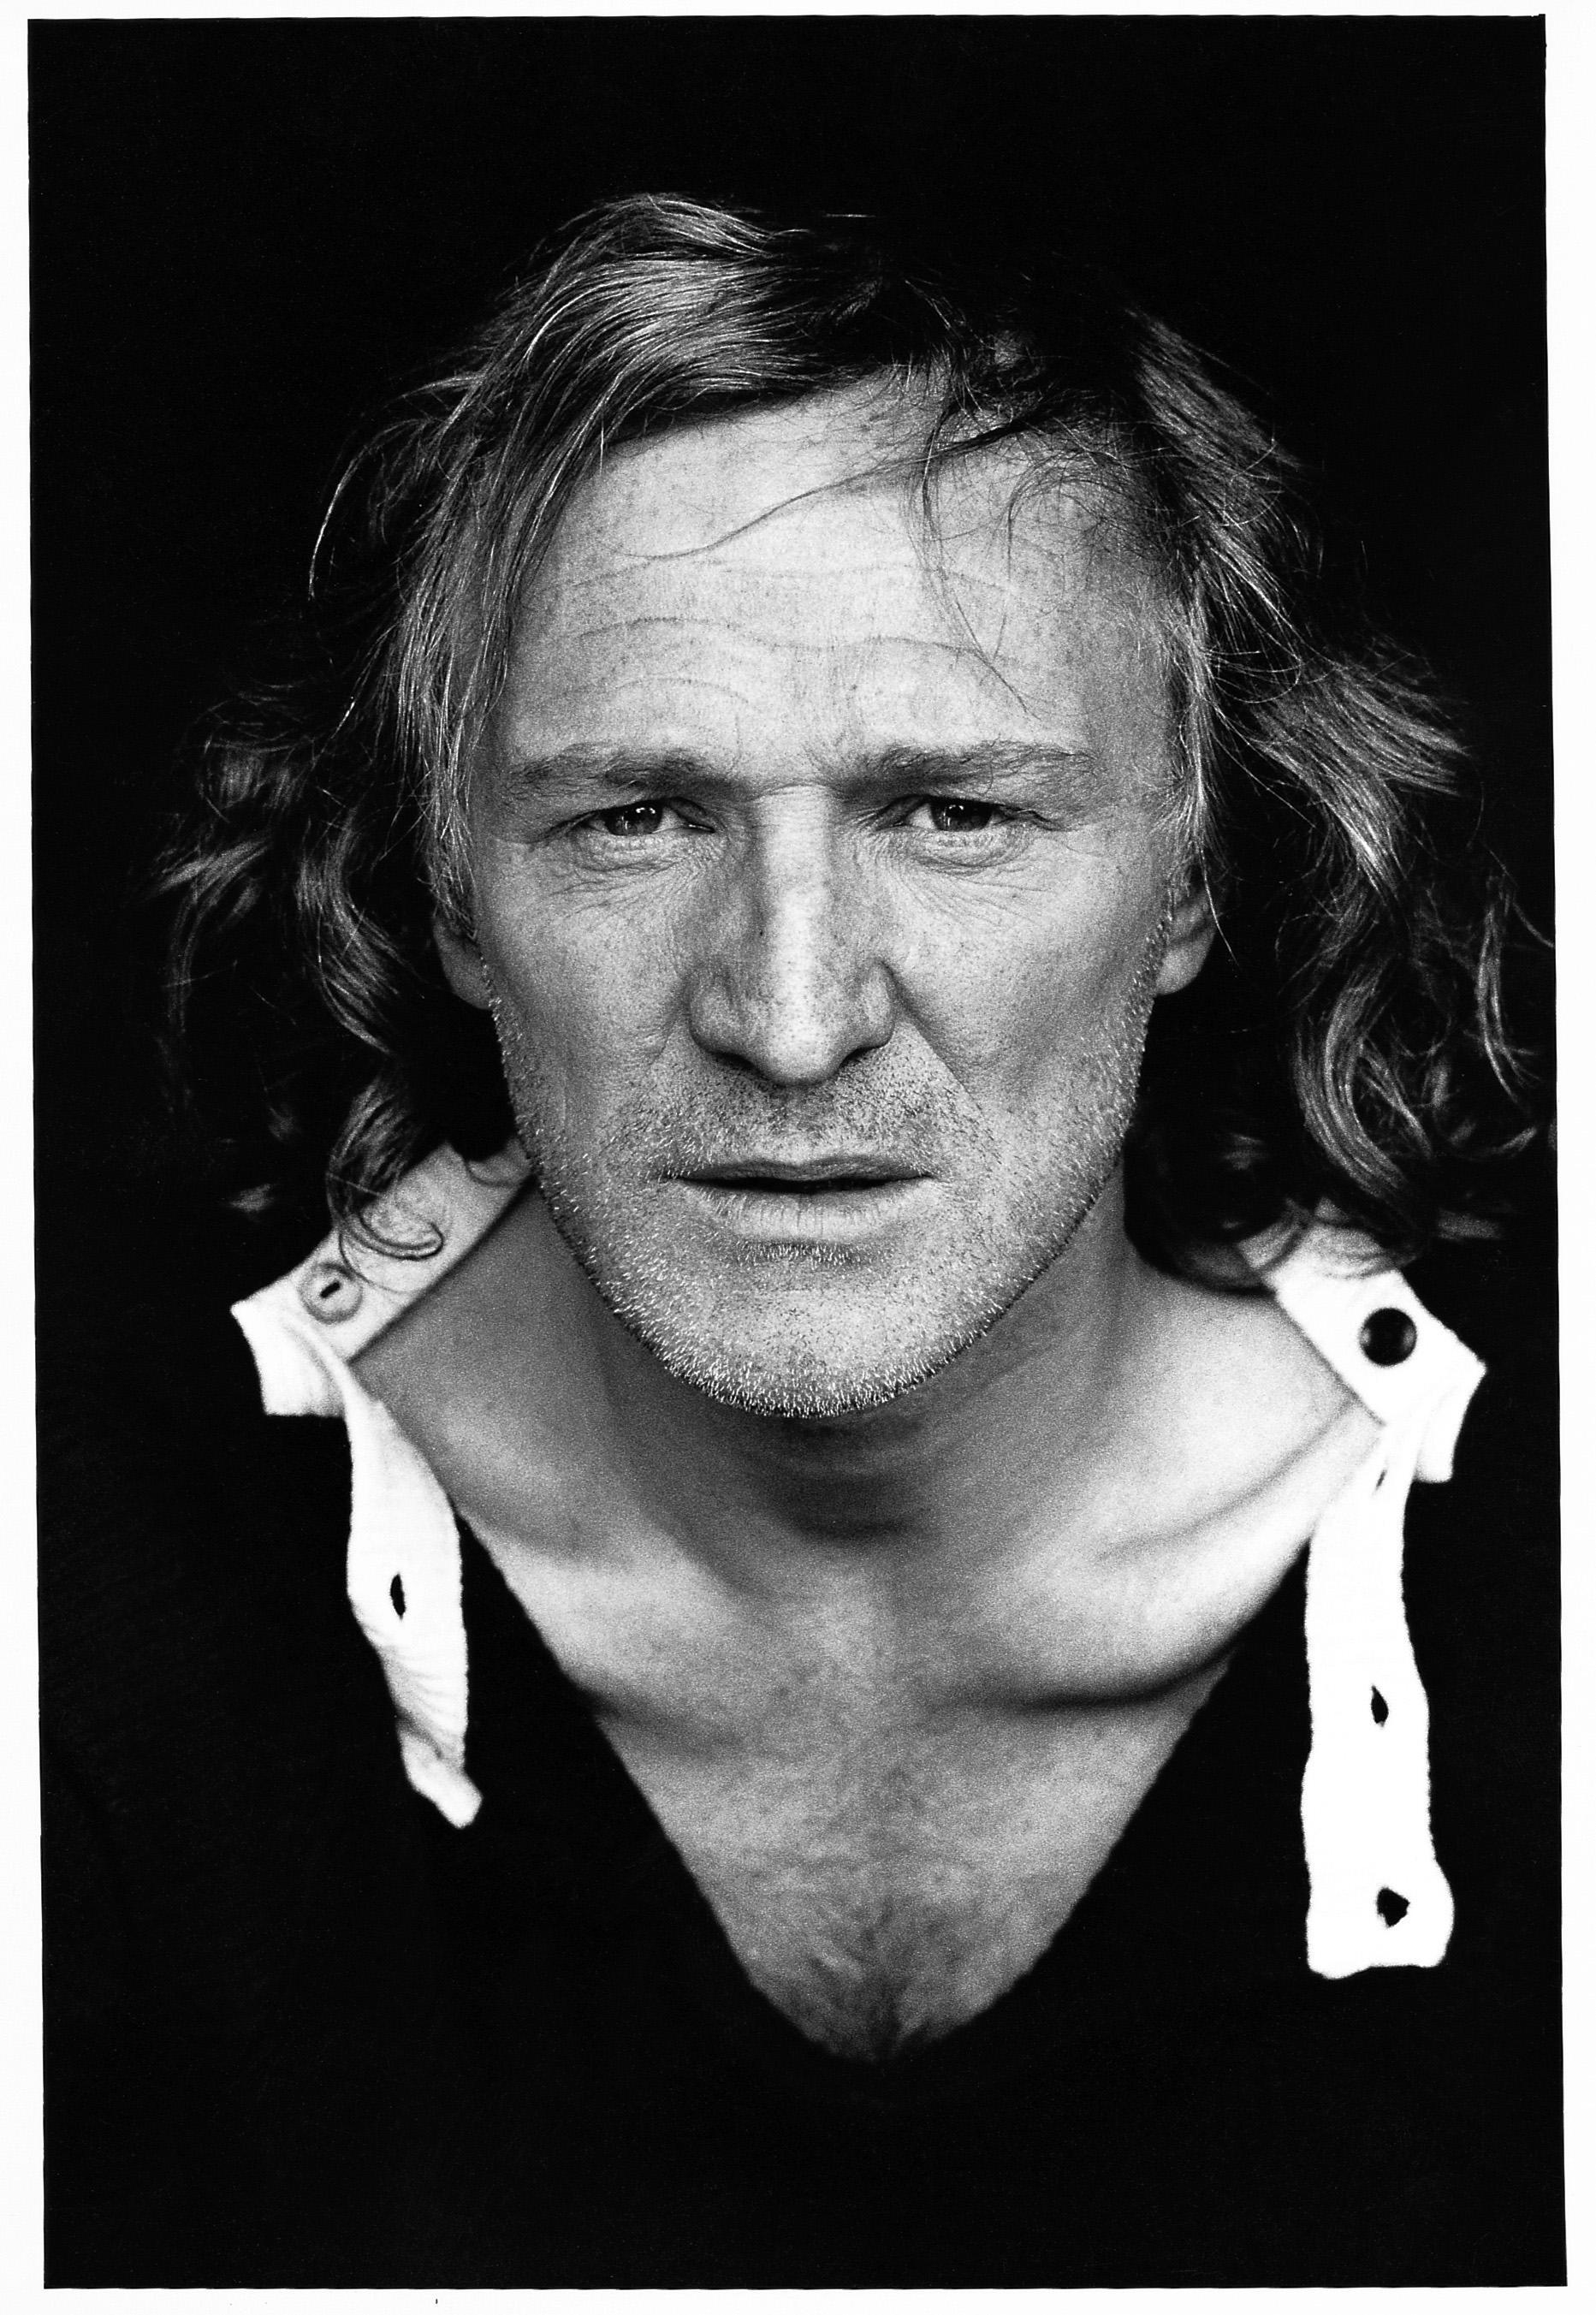 David Steen Portrait Photograph - RICHARD HARRIS, MALTA, OCTOBER, 1973 - Portrait, Black & White Photo